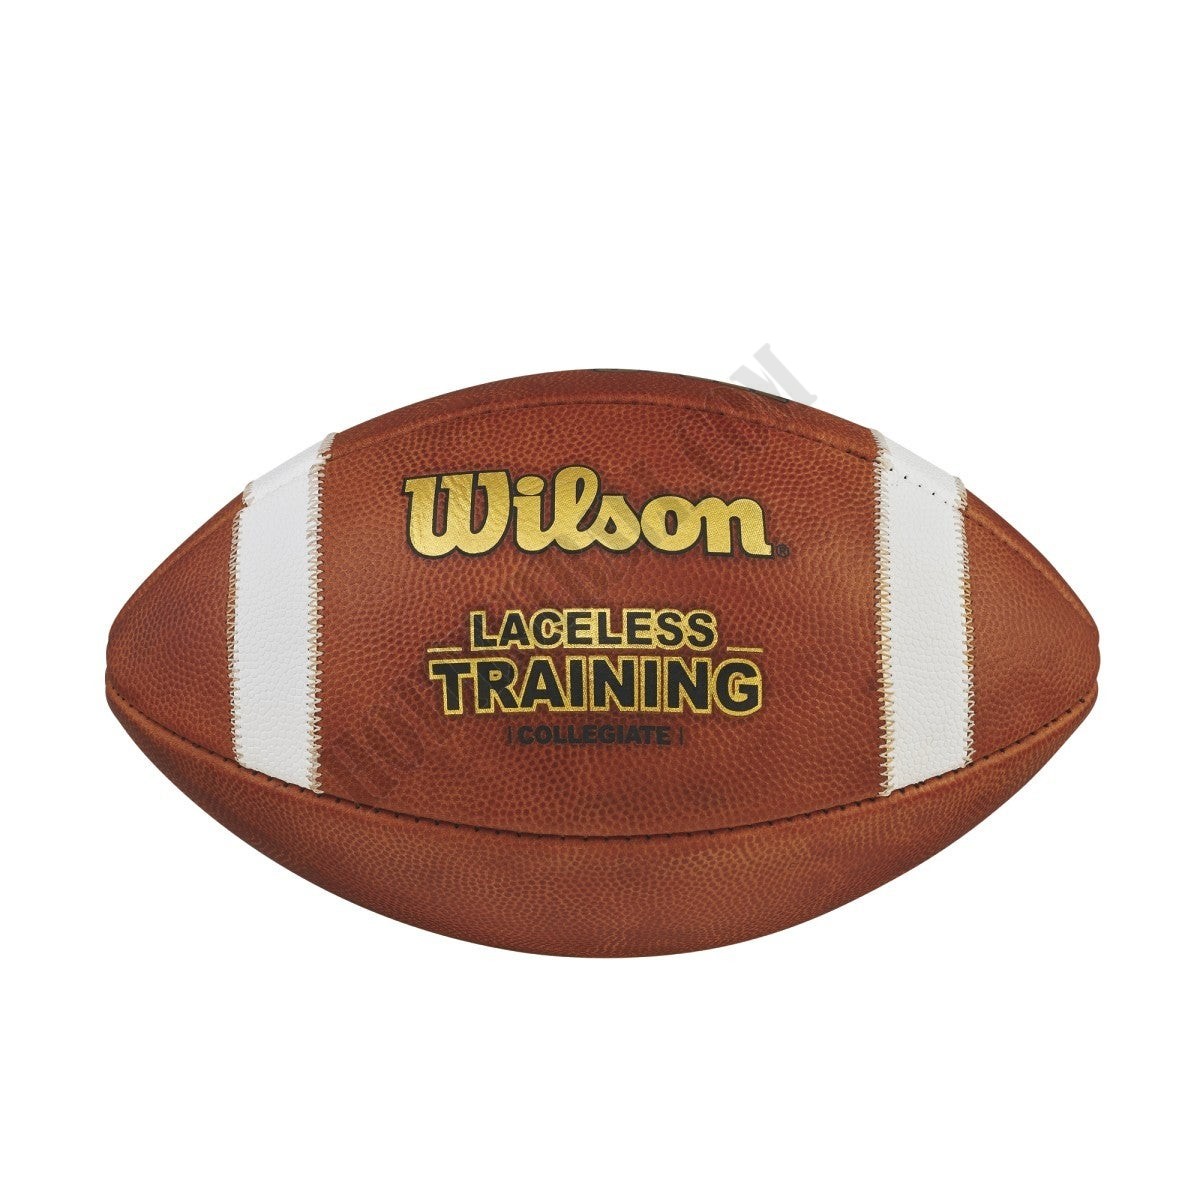 Football Training Camp Kit - Wilson Discount Store - -1